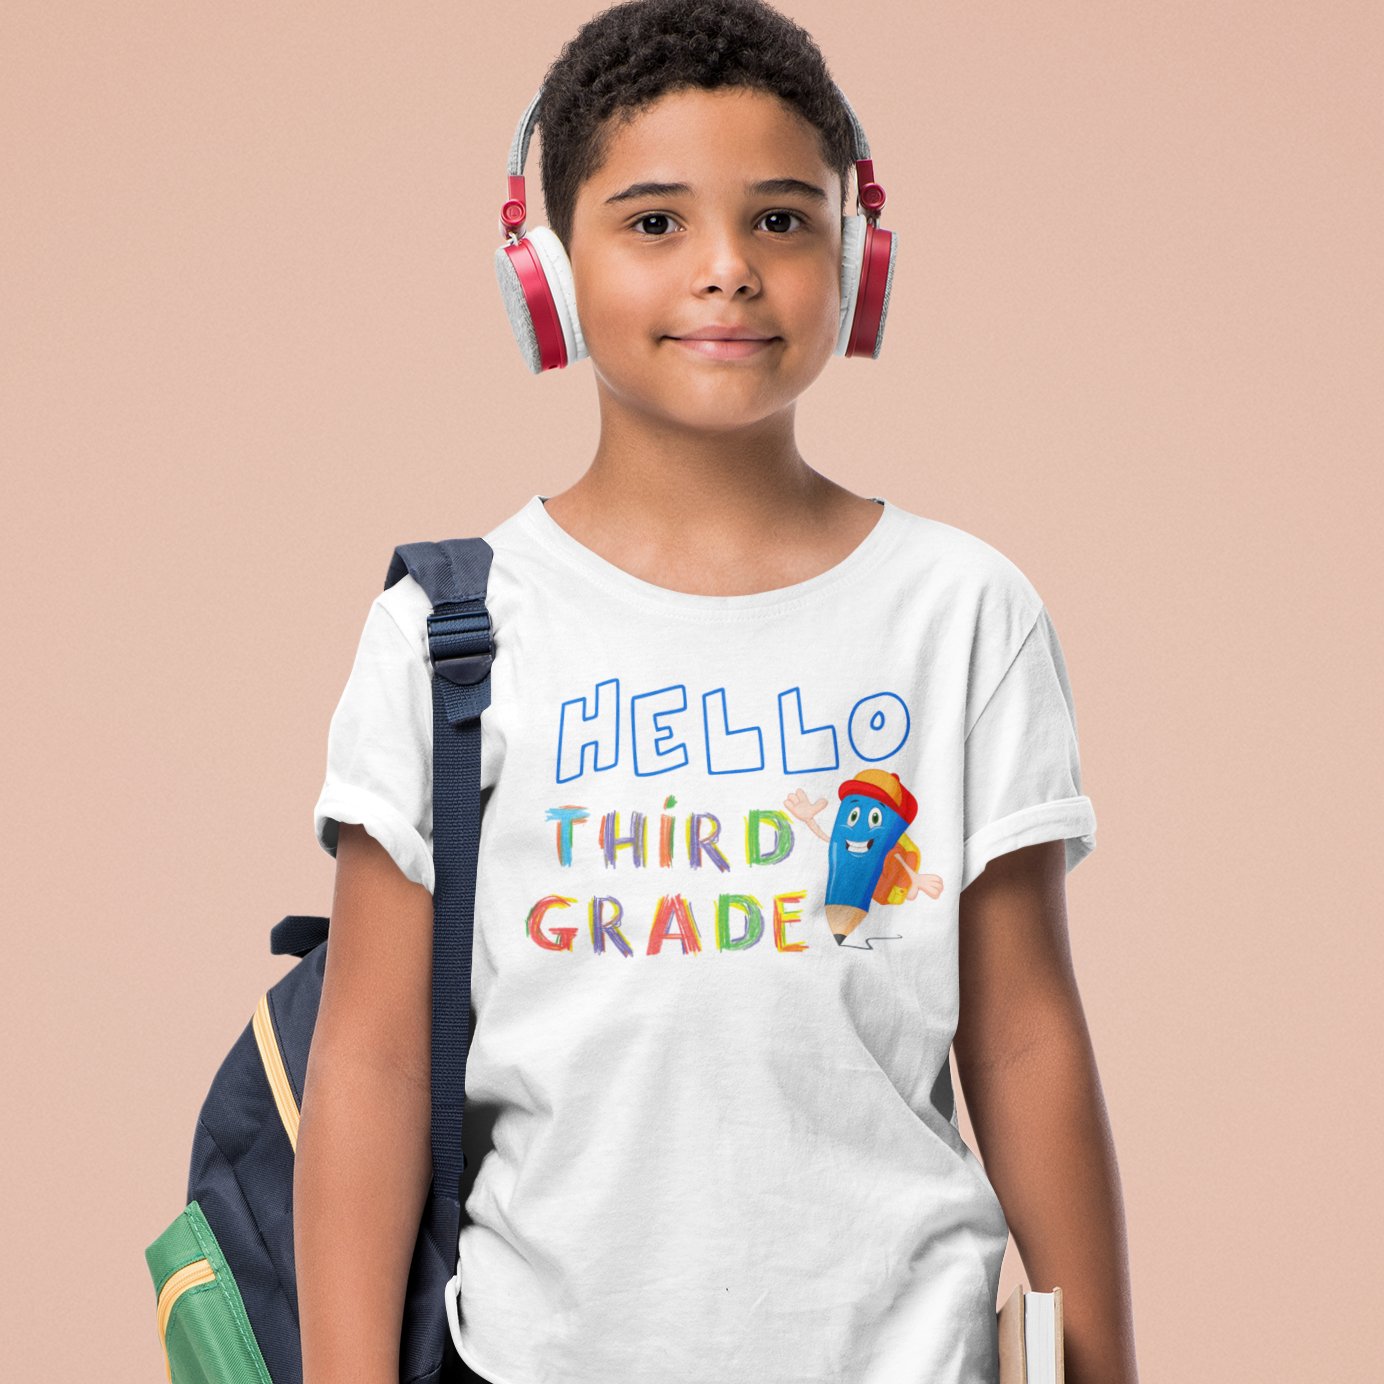 Hello, Third Grade: Super Scholar T-shirt – Where Learning Takes Flight!